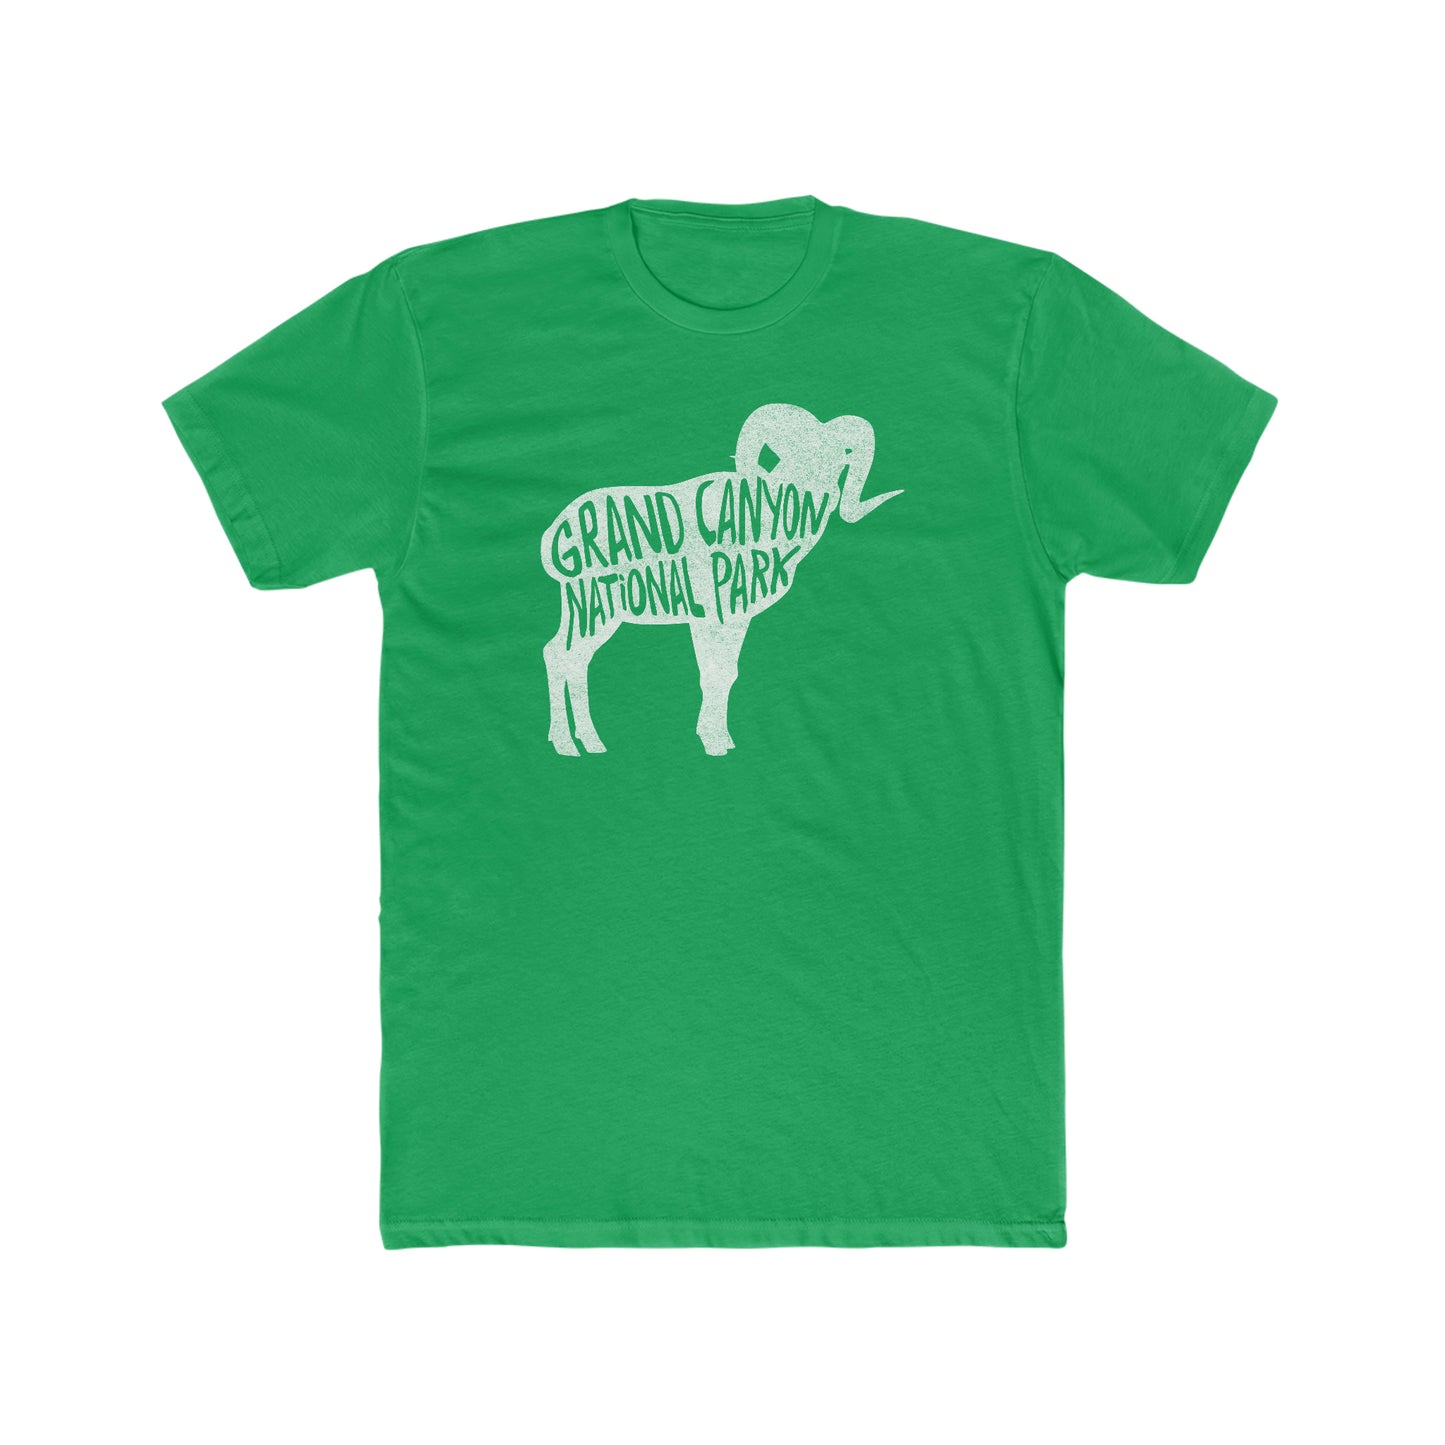 Grand Canyon National Park T-Shirt - Bighorn Sheep